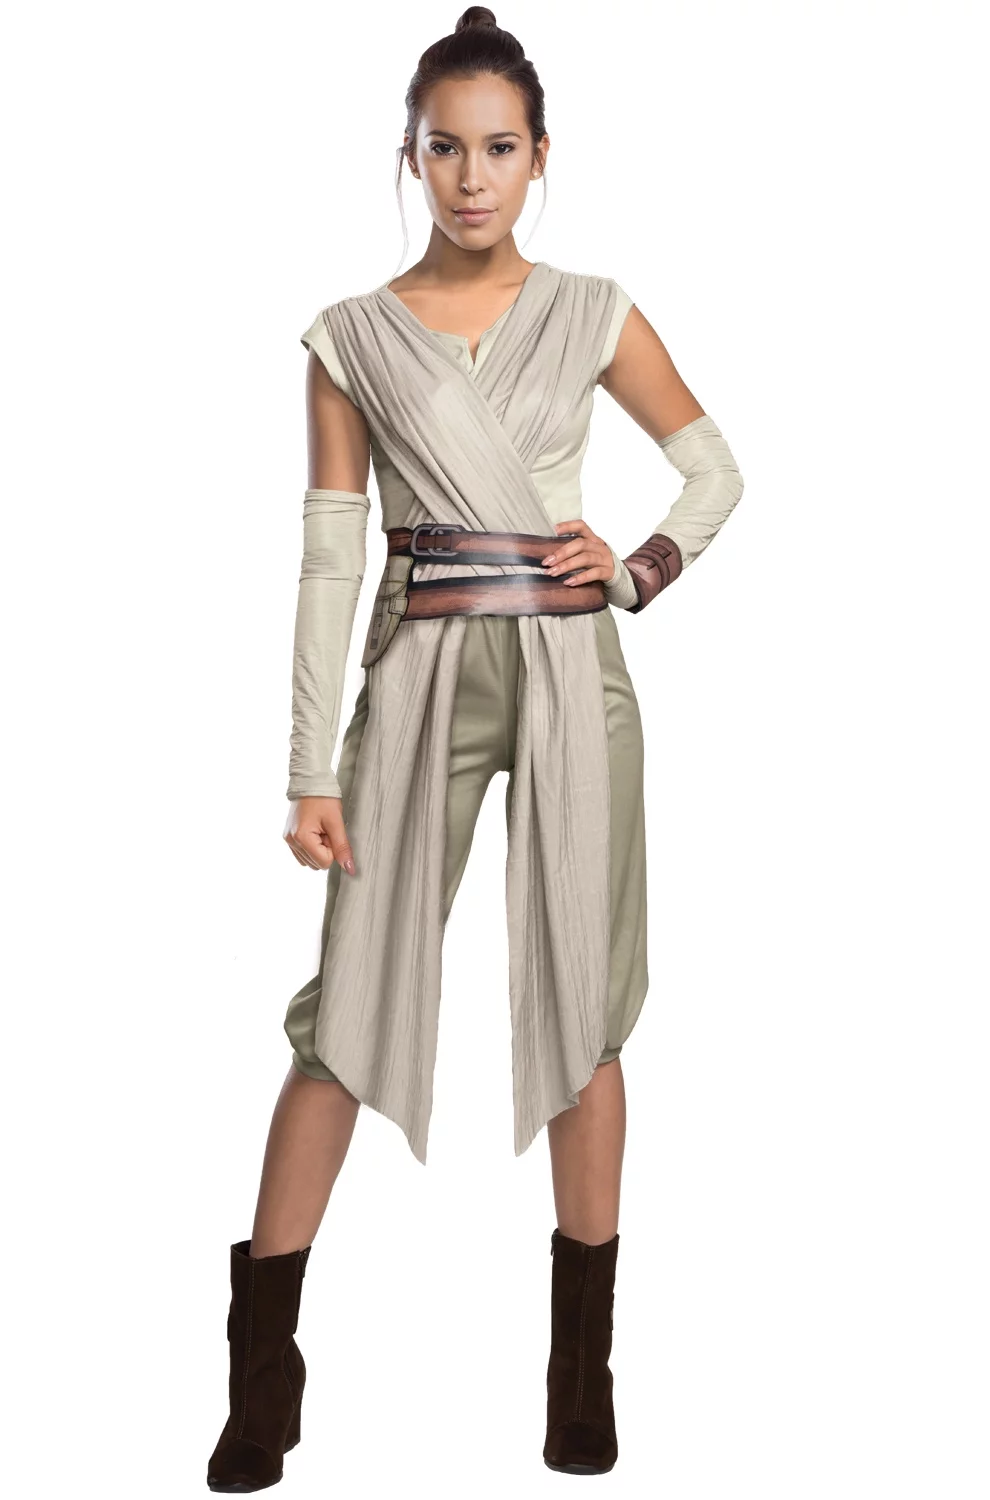 Rubie's Star Wars Episode VII Deluxe Rey Women's Halloween Fancy-Dress Costume for Adult, M